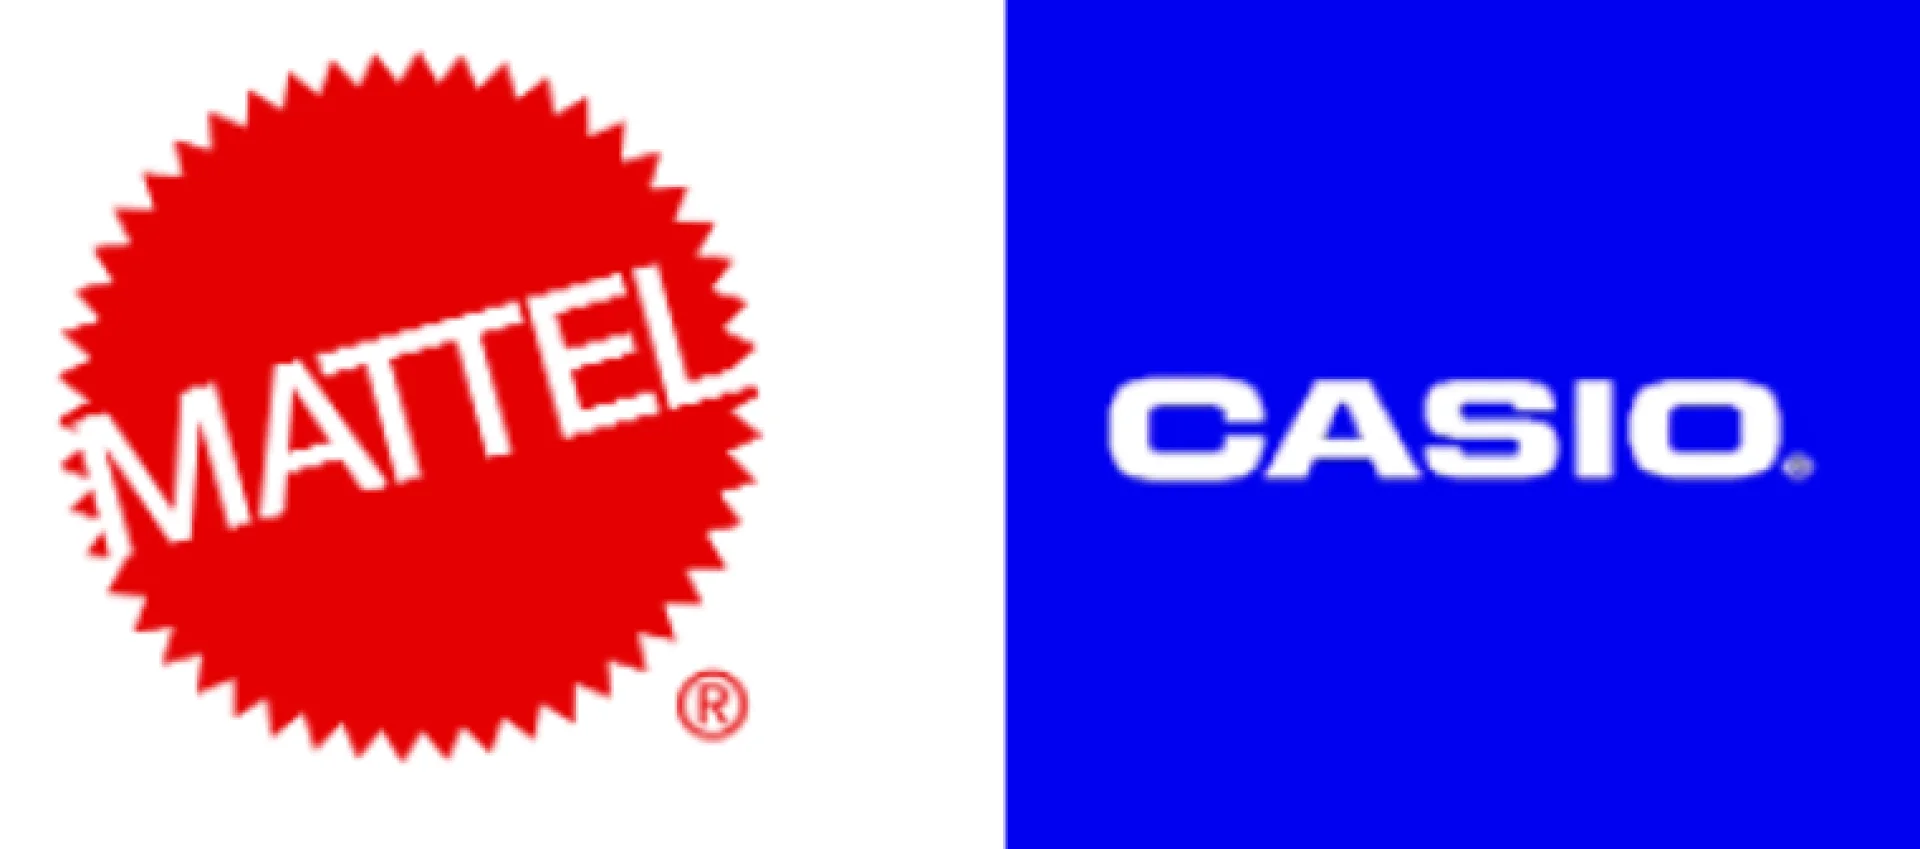 New Brands on the site! Mattel & Casio